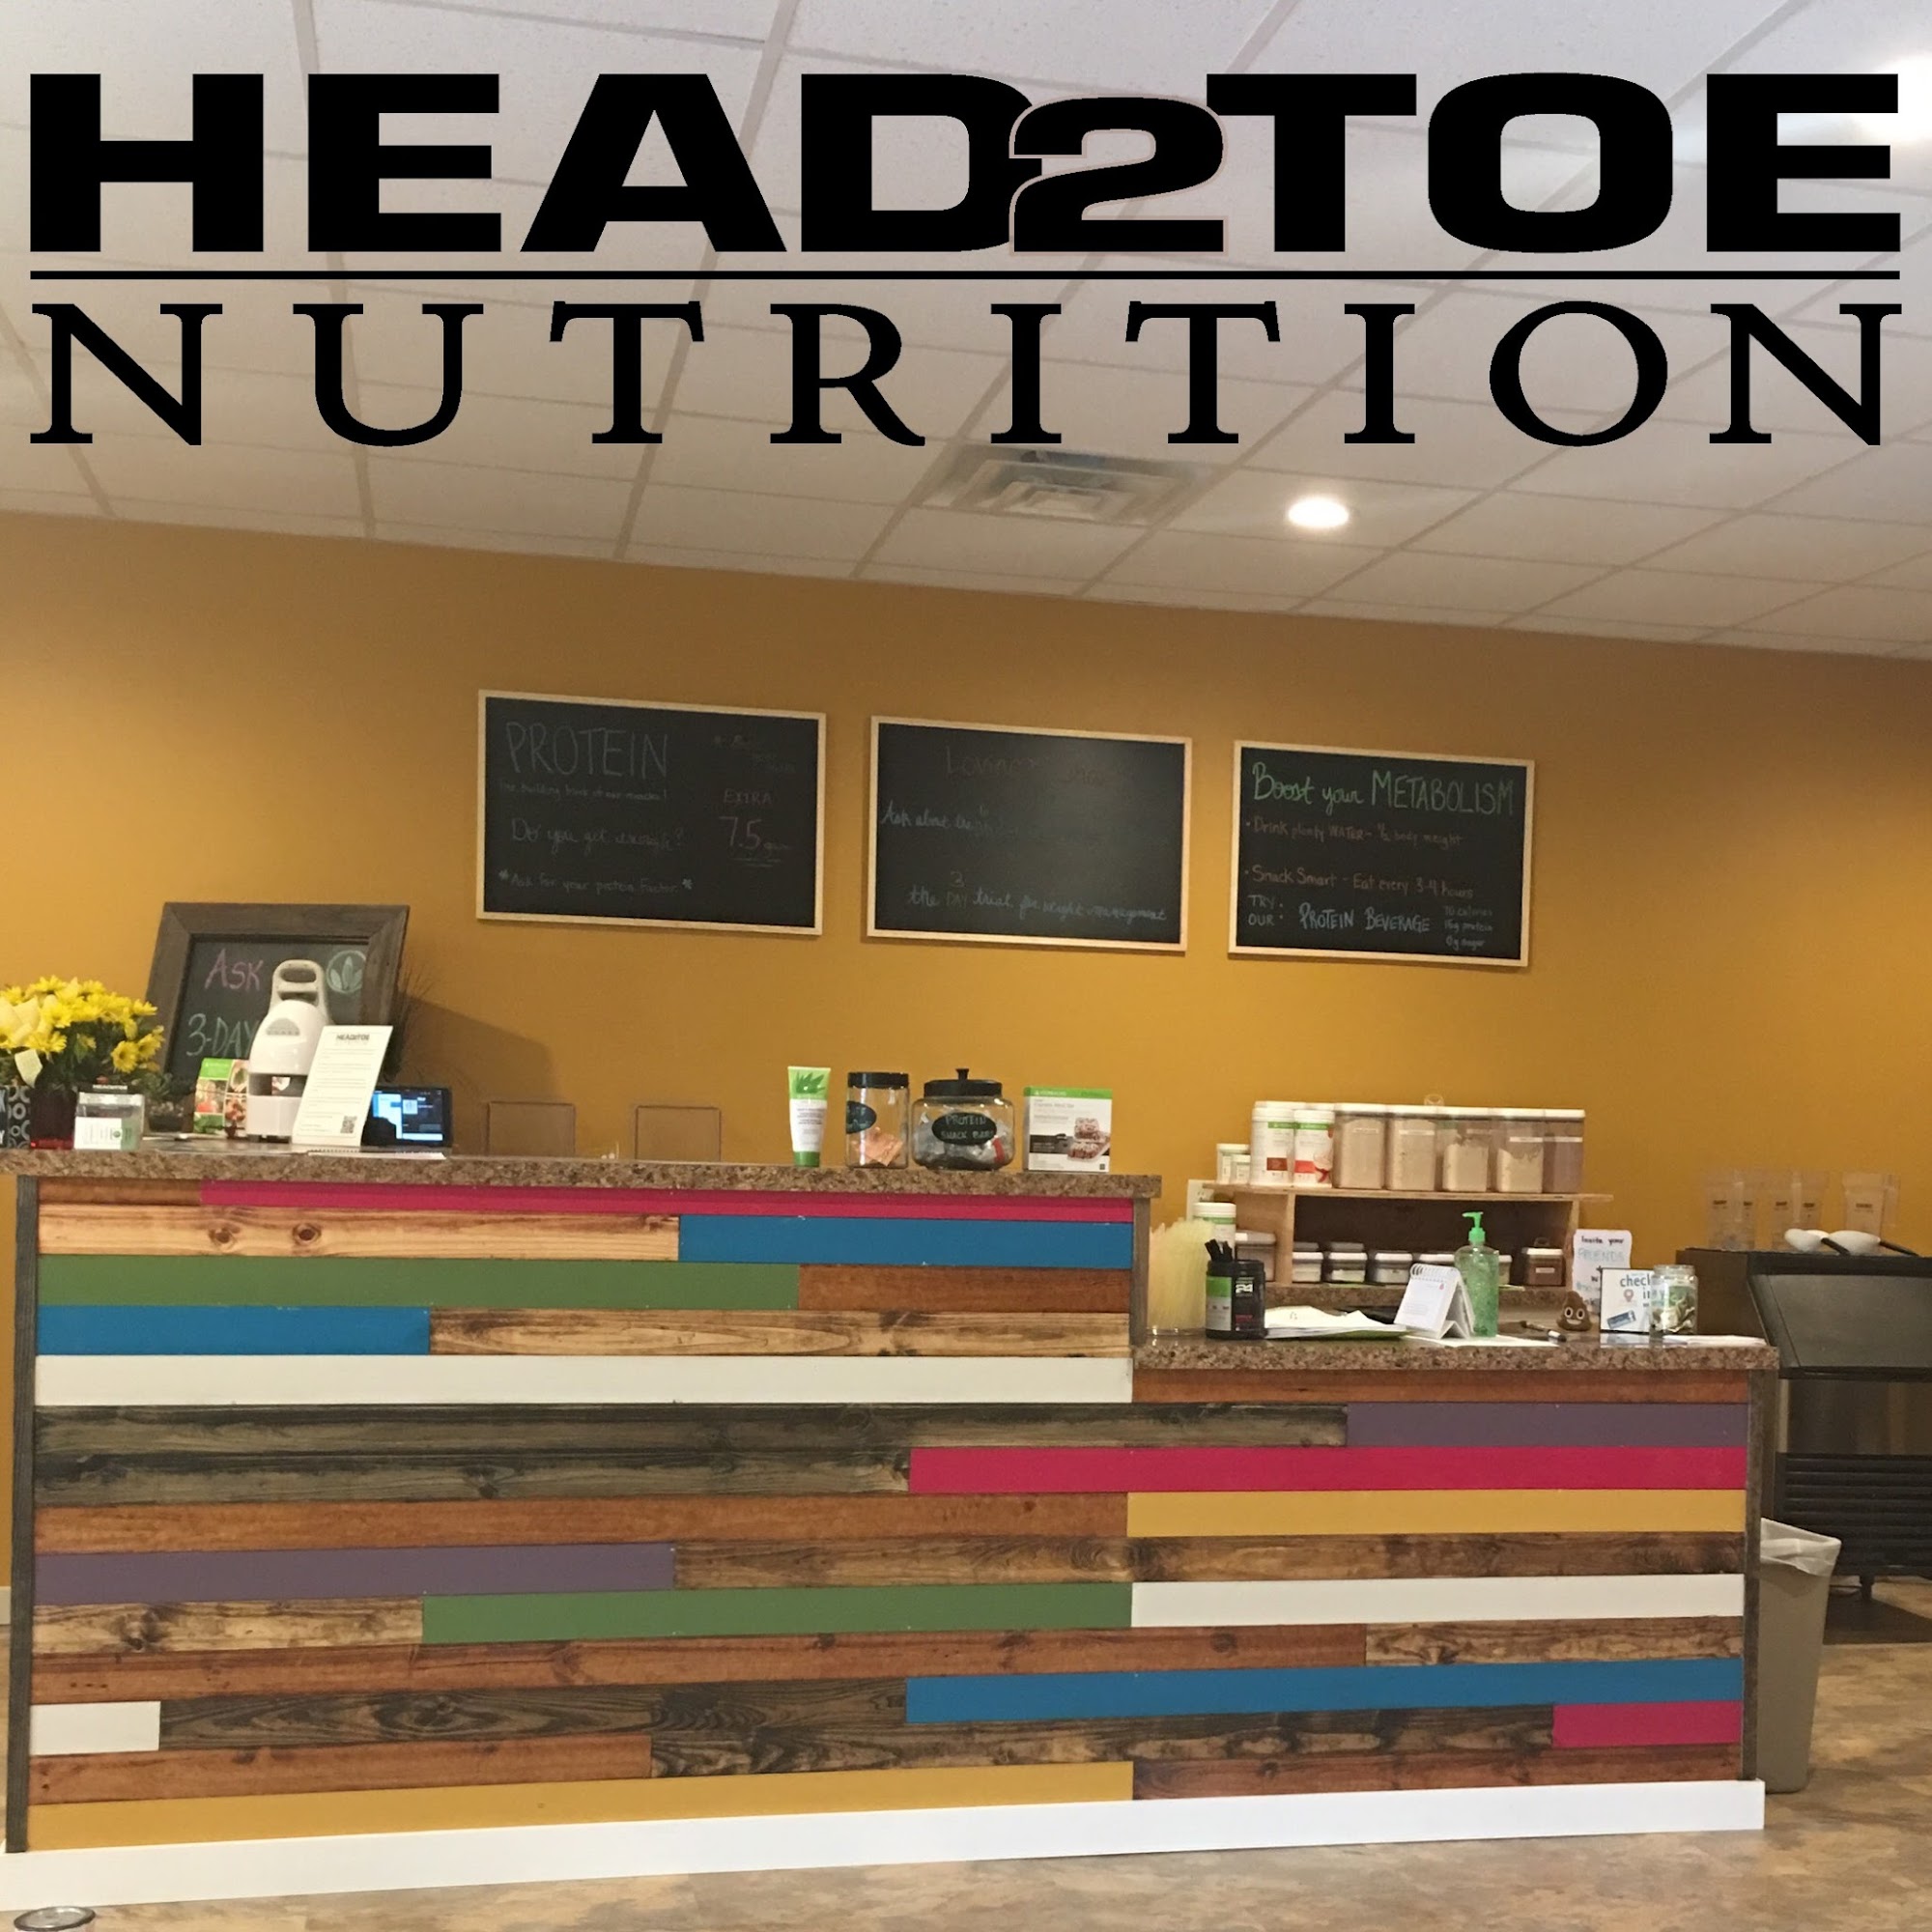 Head2Toe Nutrition